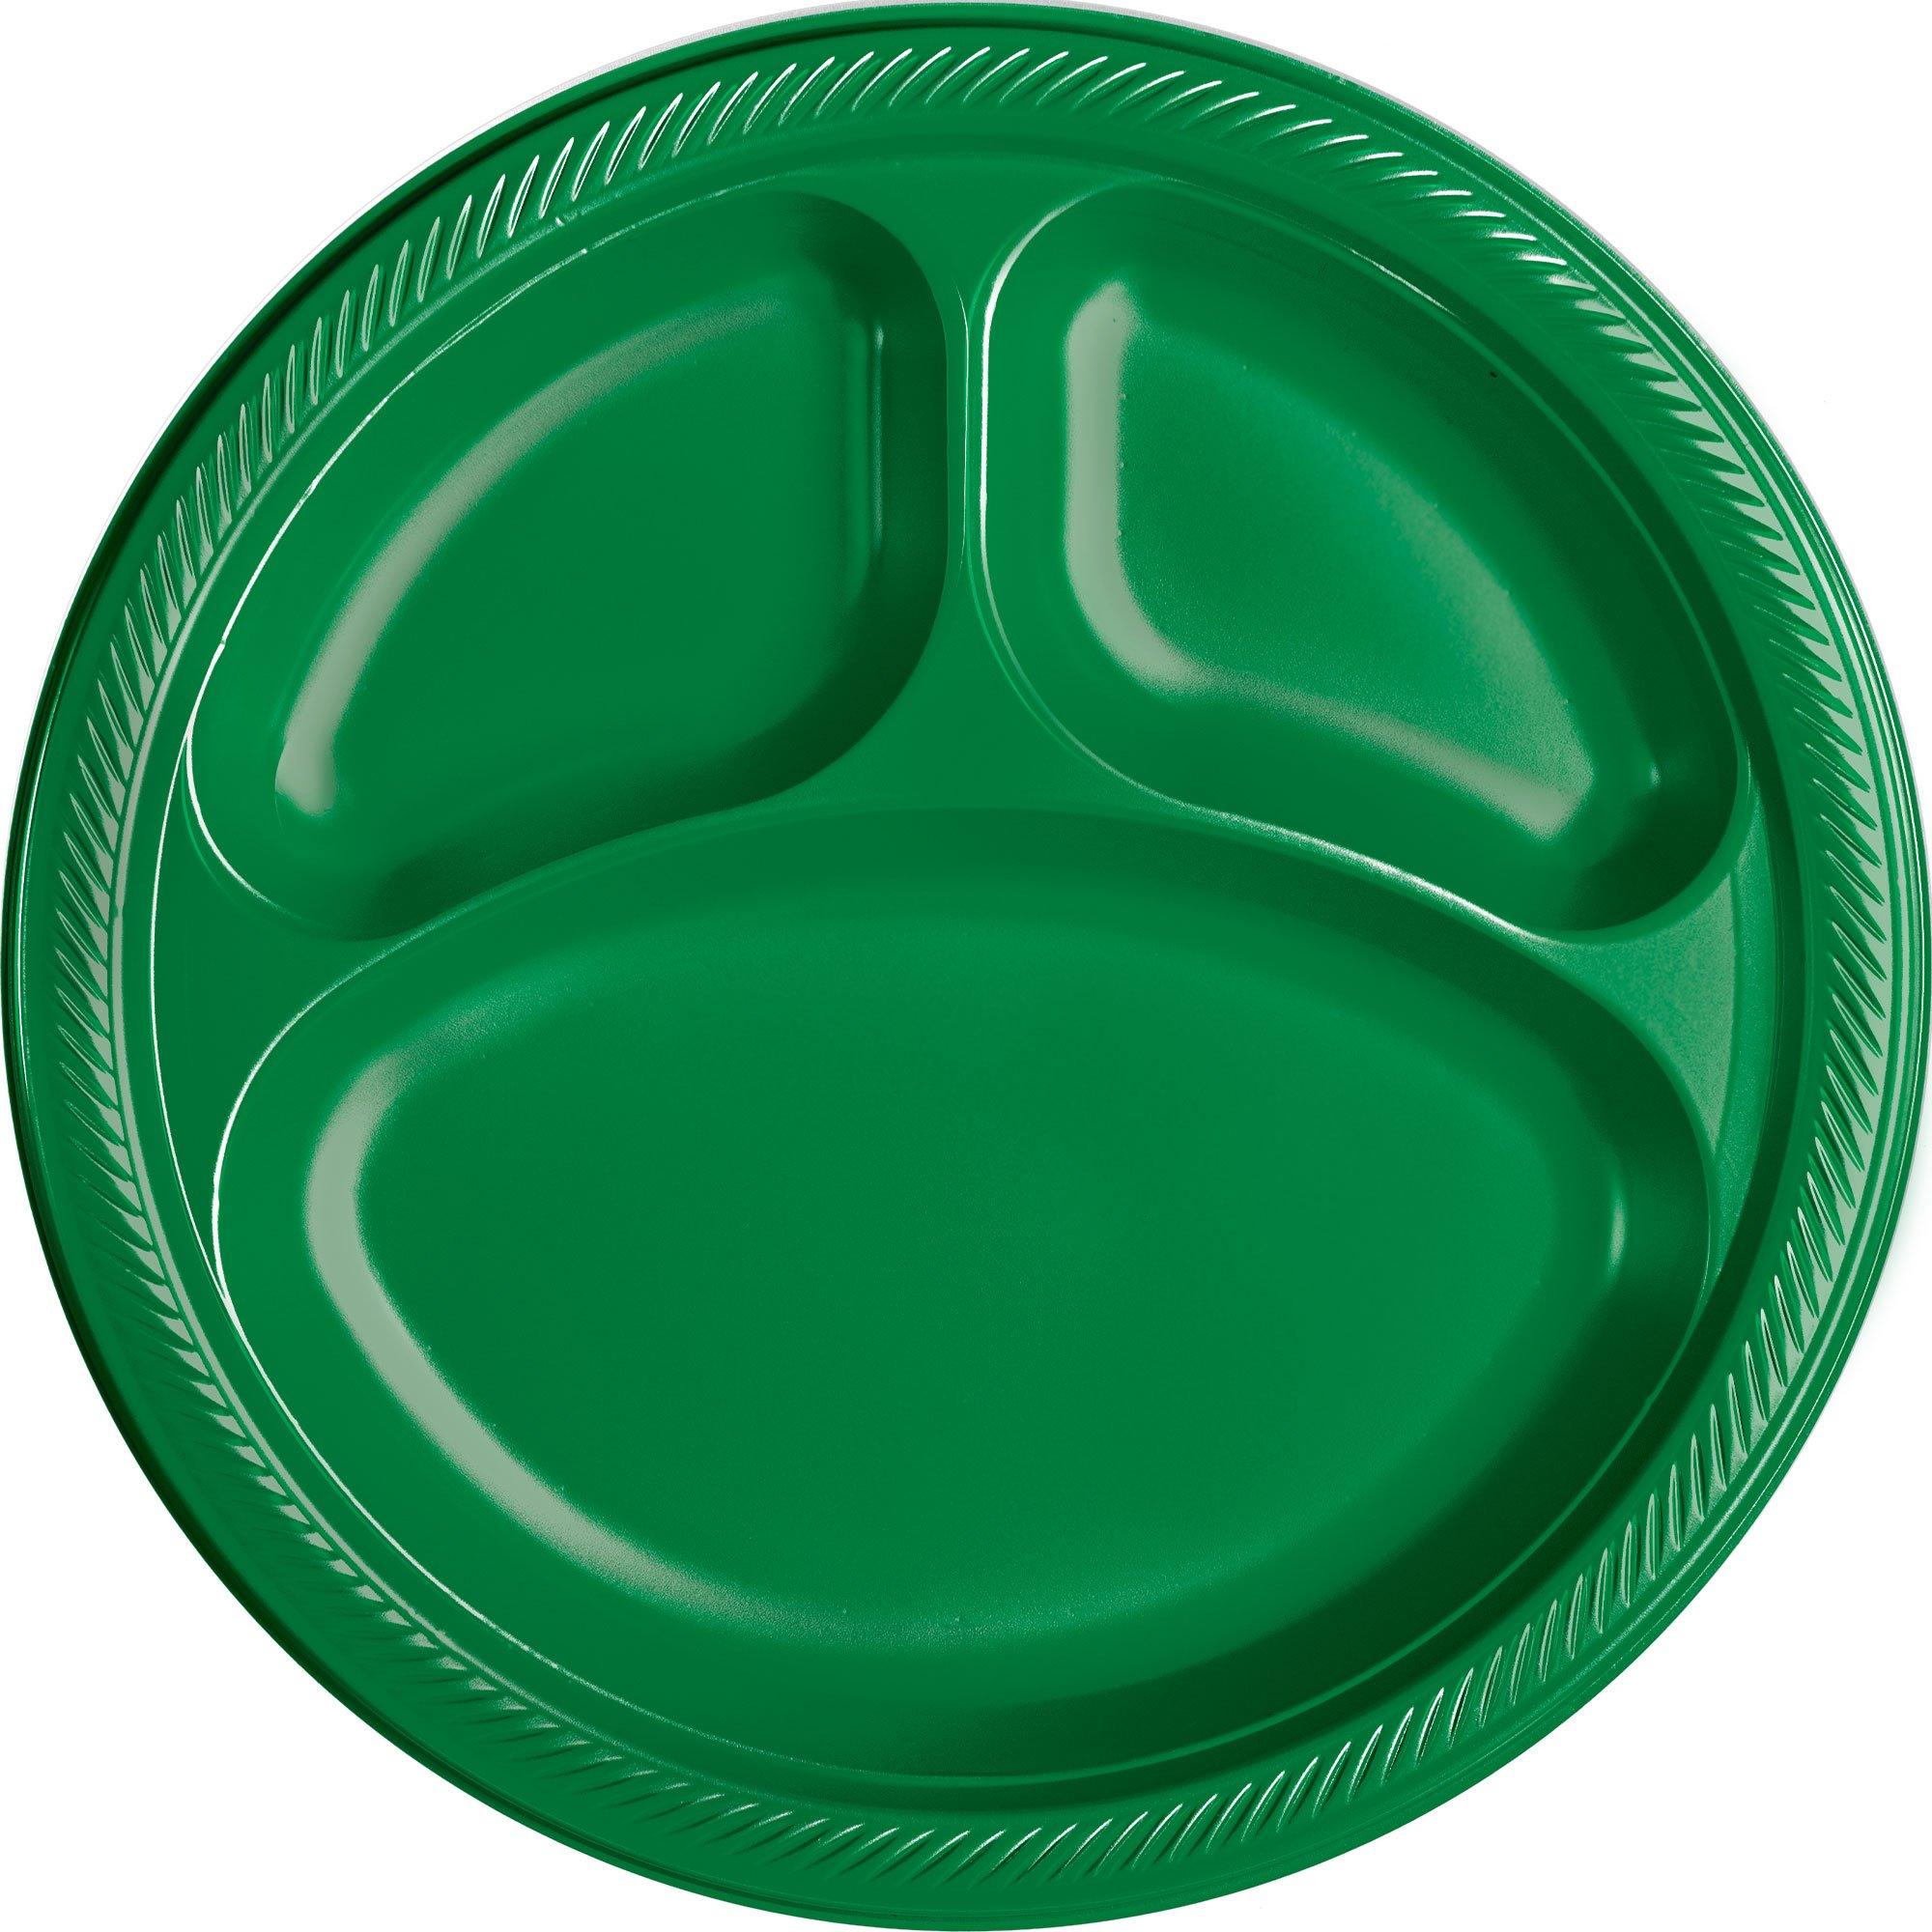 Plastic Divided Dinner Plates, 10.25in